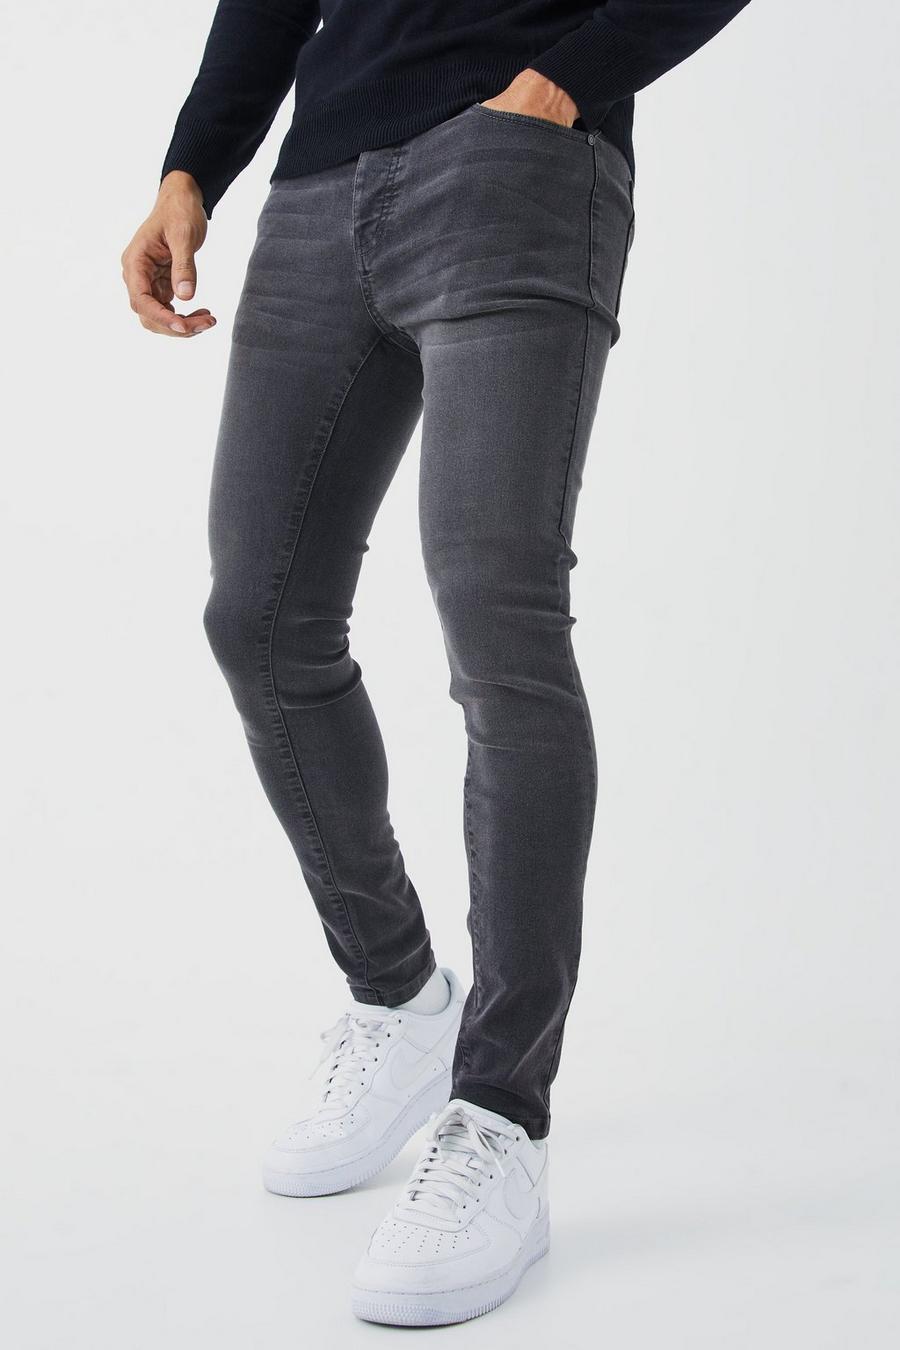 Super Skinny Stretch Jeans, Charcoal